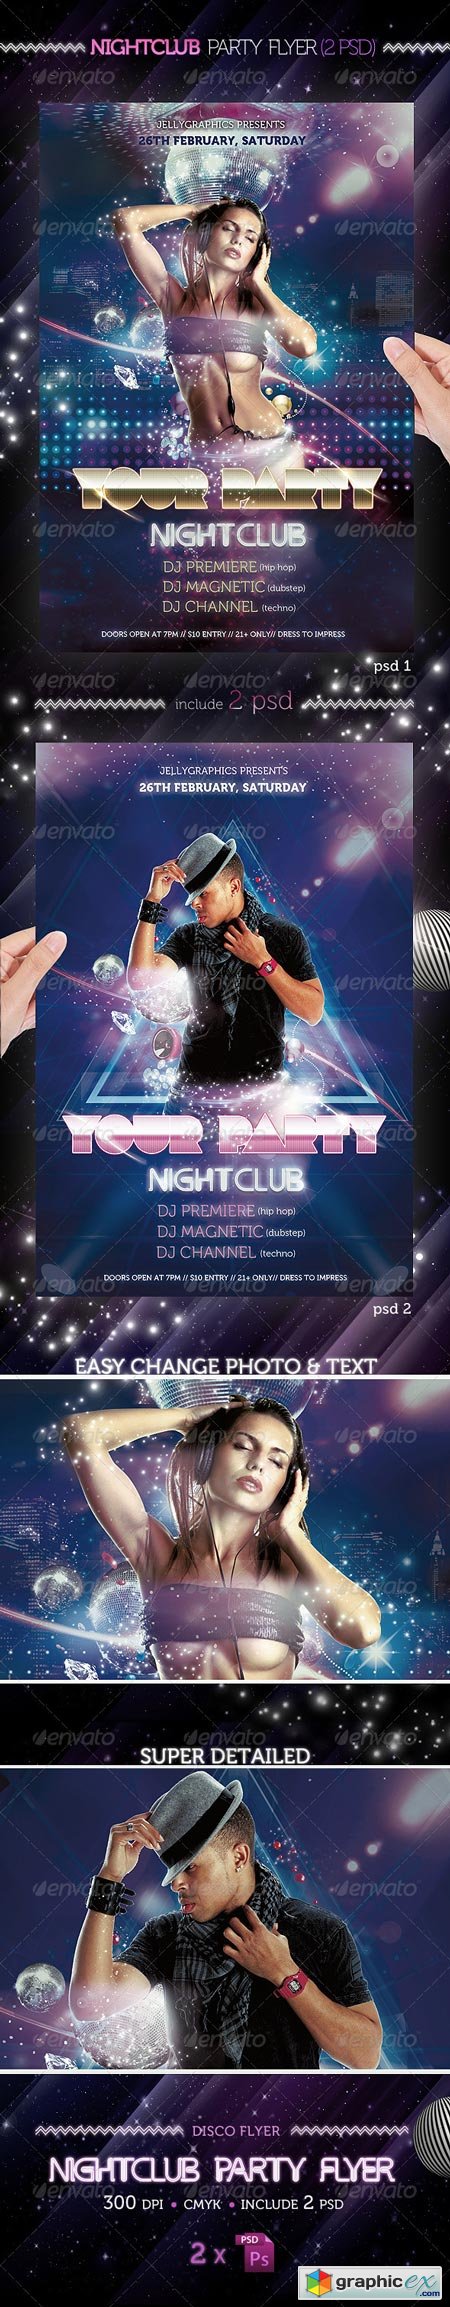 Nightclub Party Flyer Template 1665712